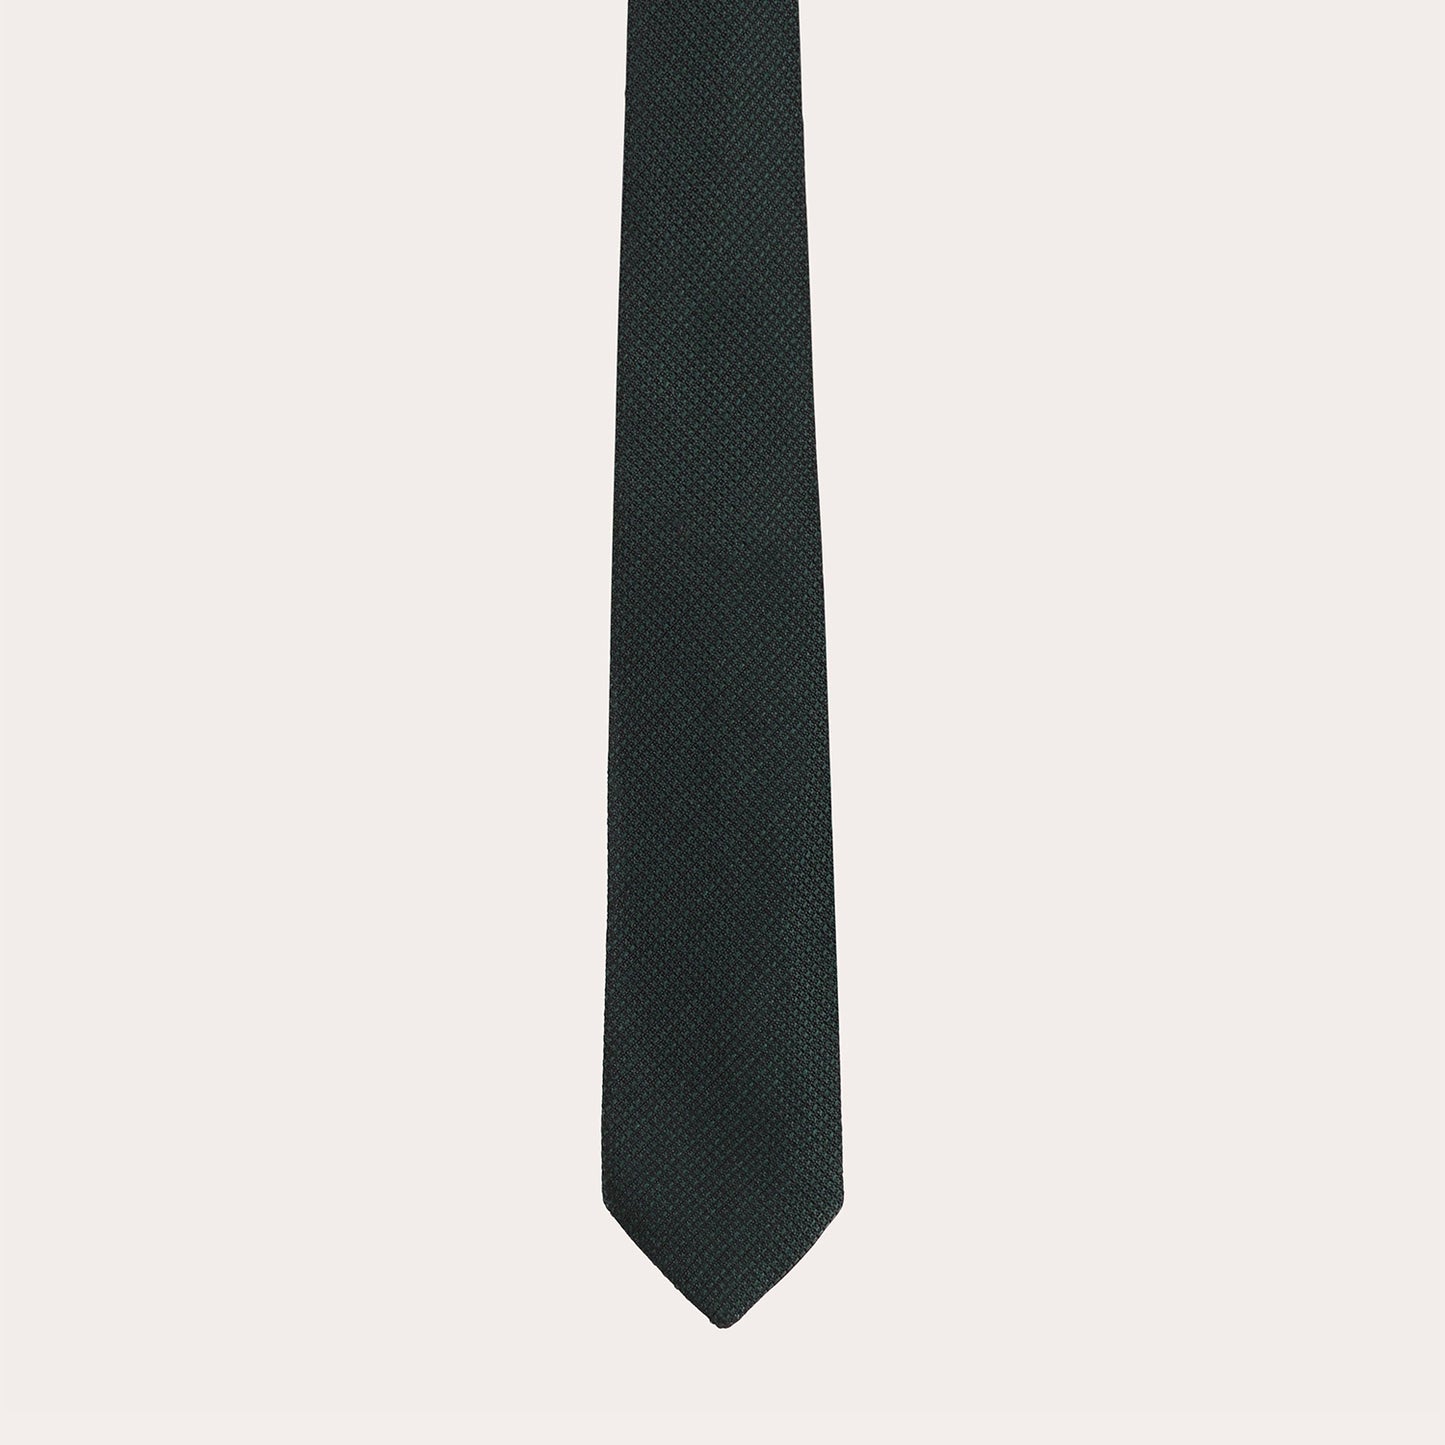 Green woven tie